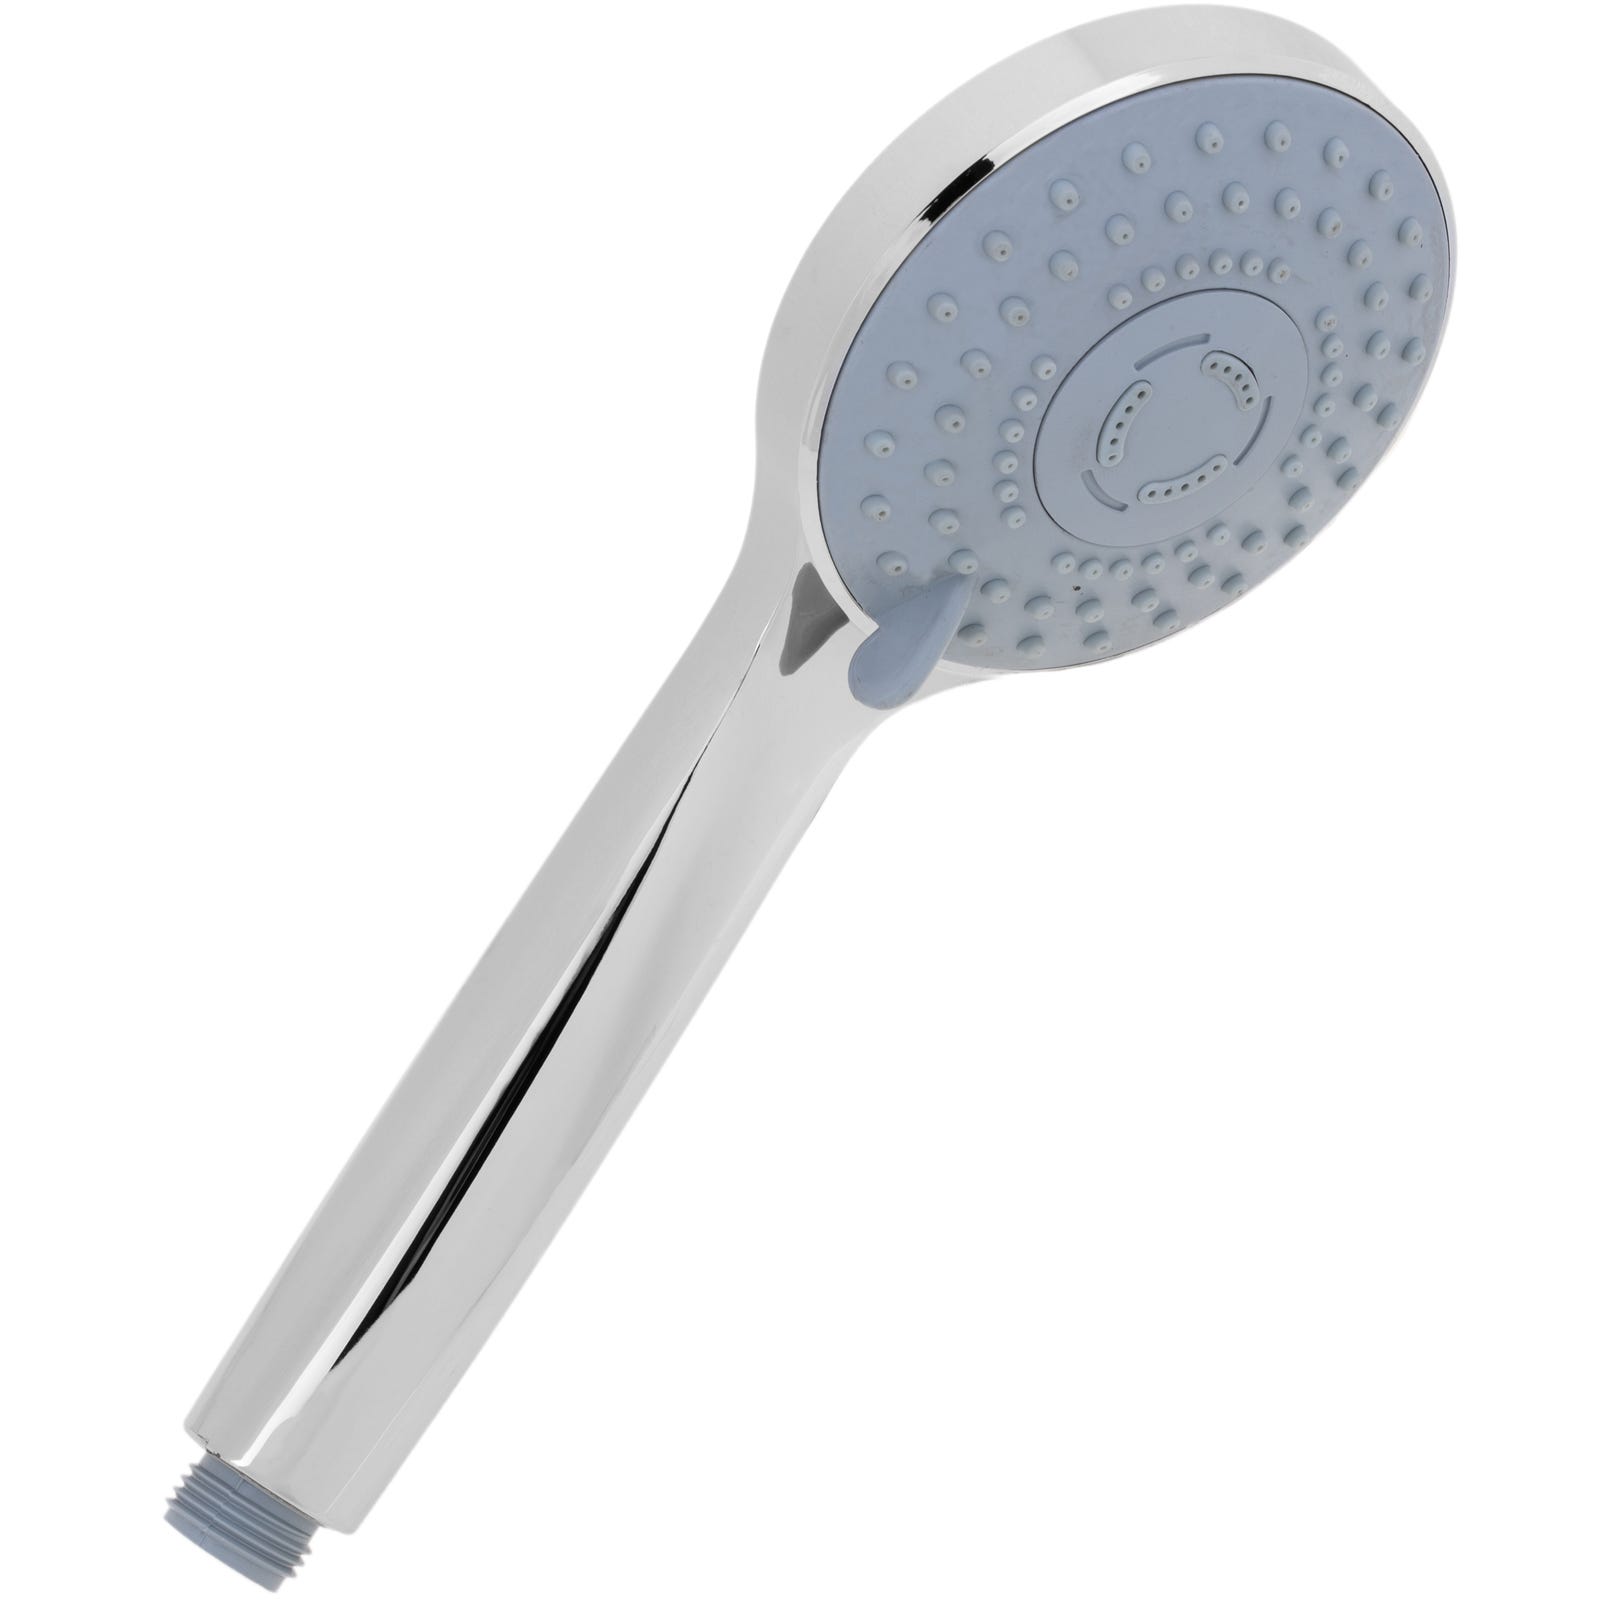 Alcachofa móvil 242mm para ducha cromado con sistema antical